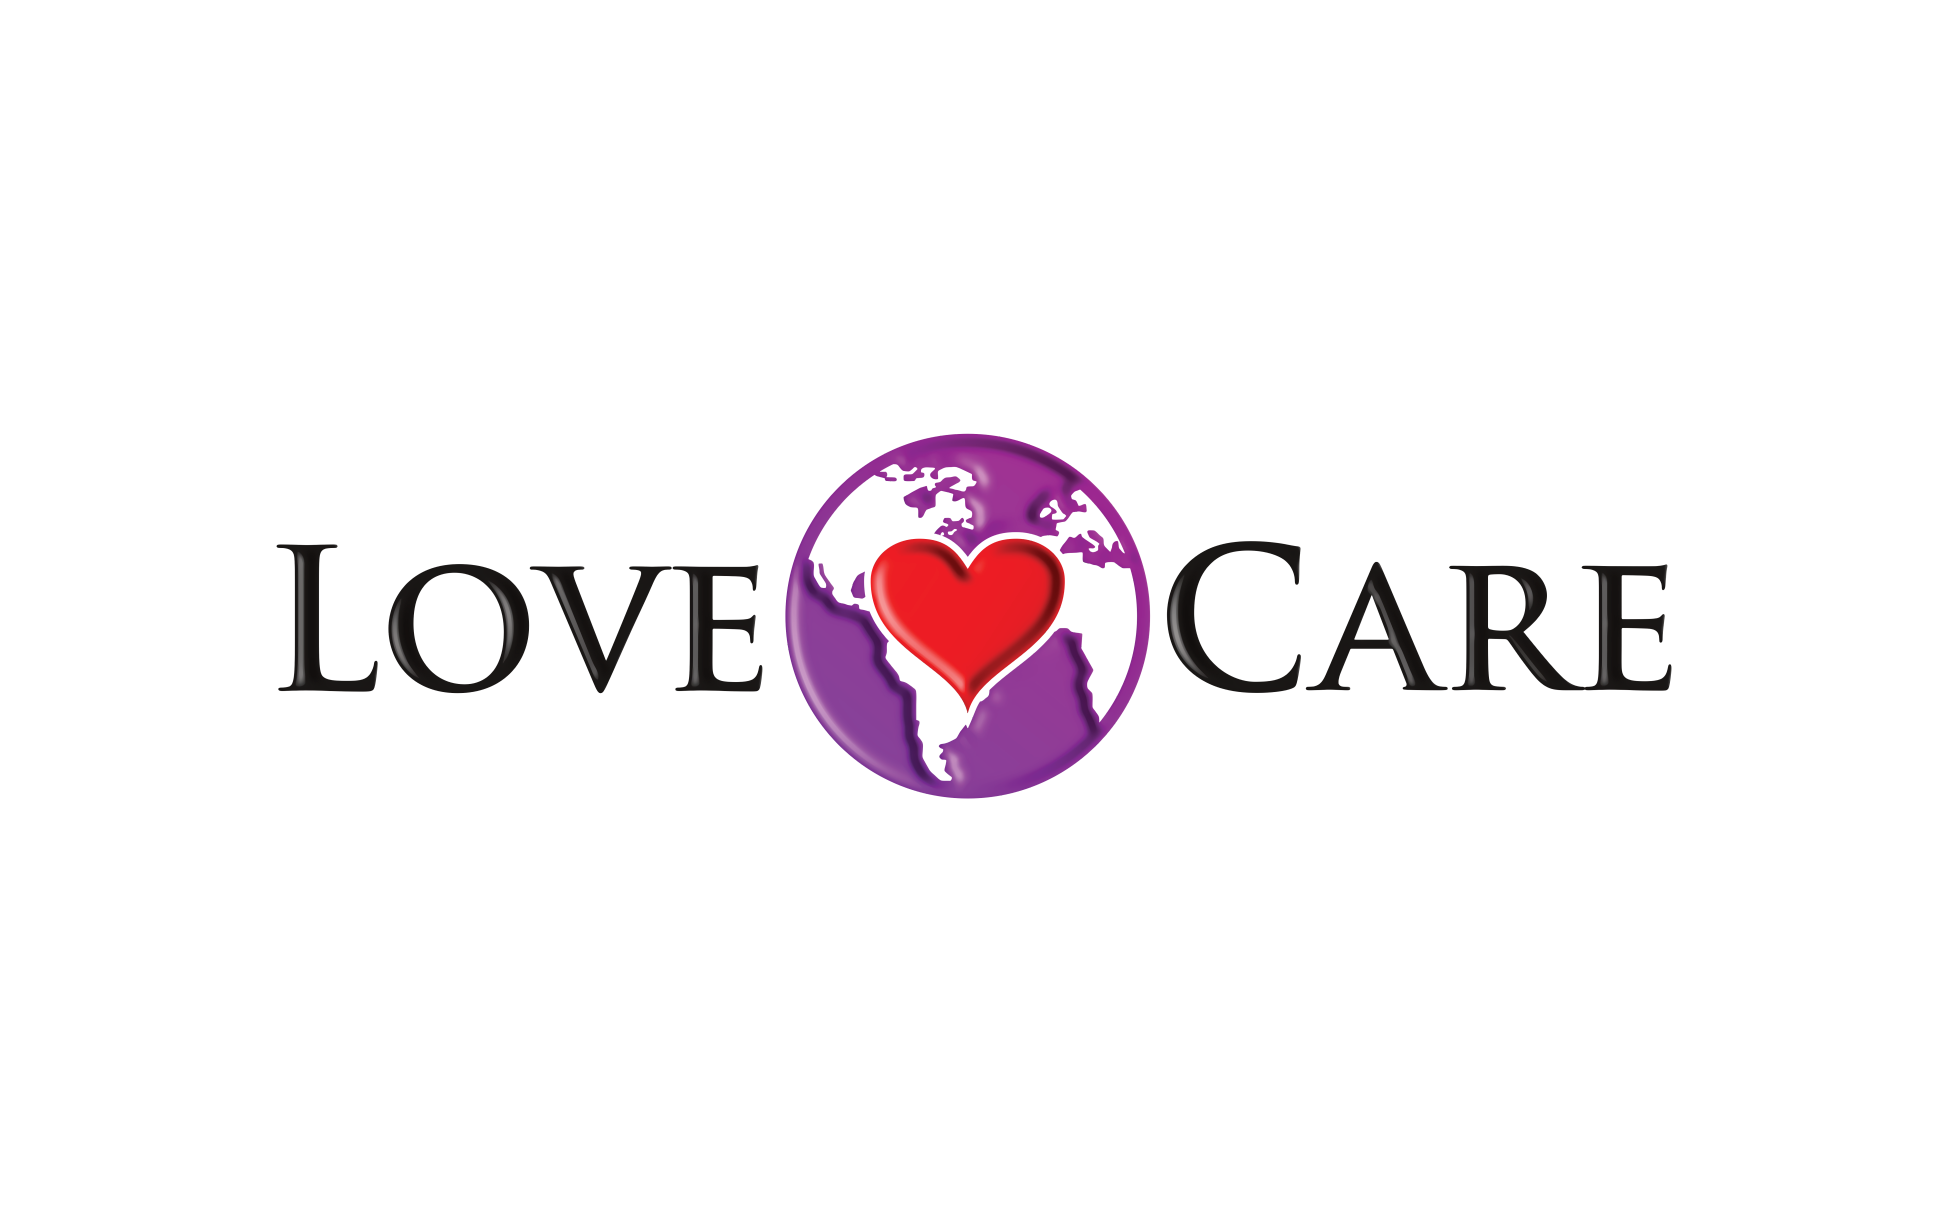 Love Care - Casselberry, FL